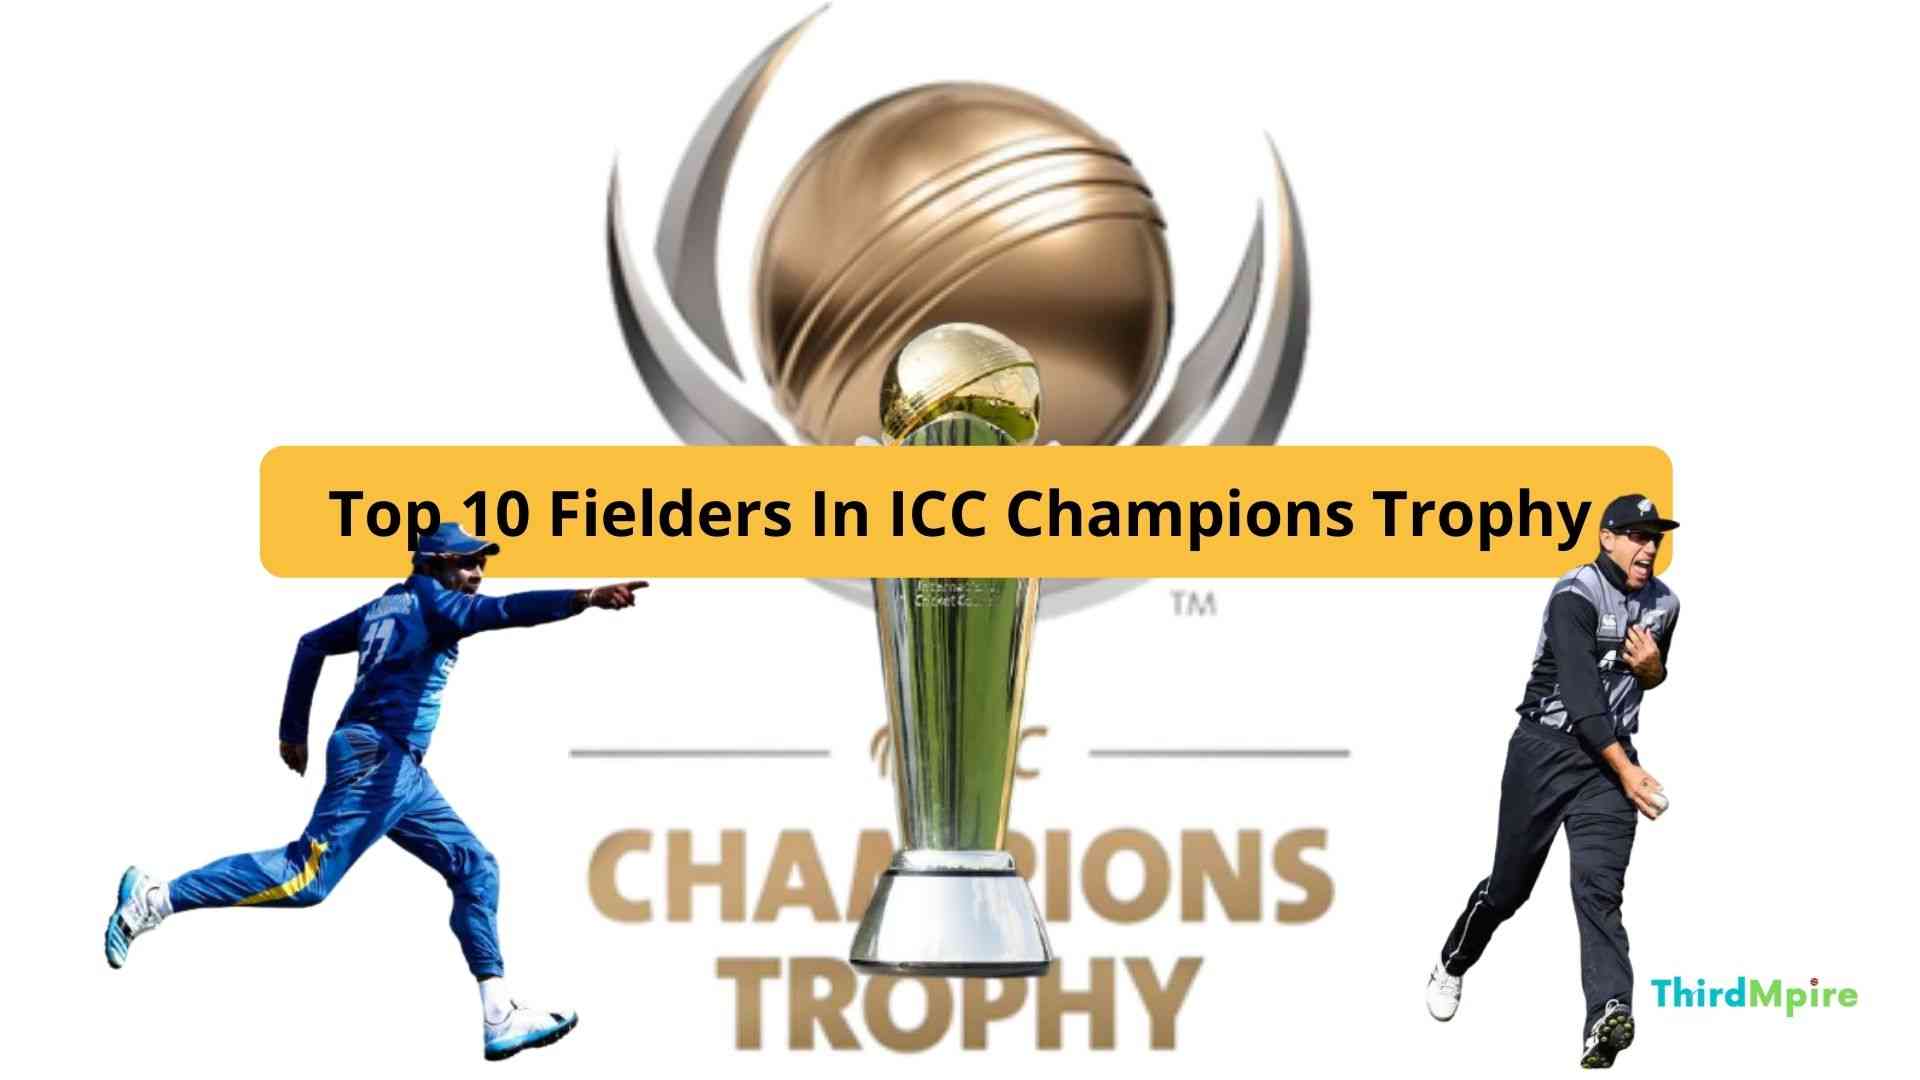 Top 10 Fielders In ICC Champions Trophy